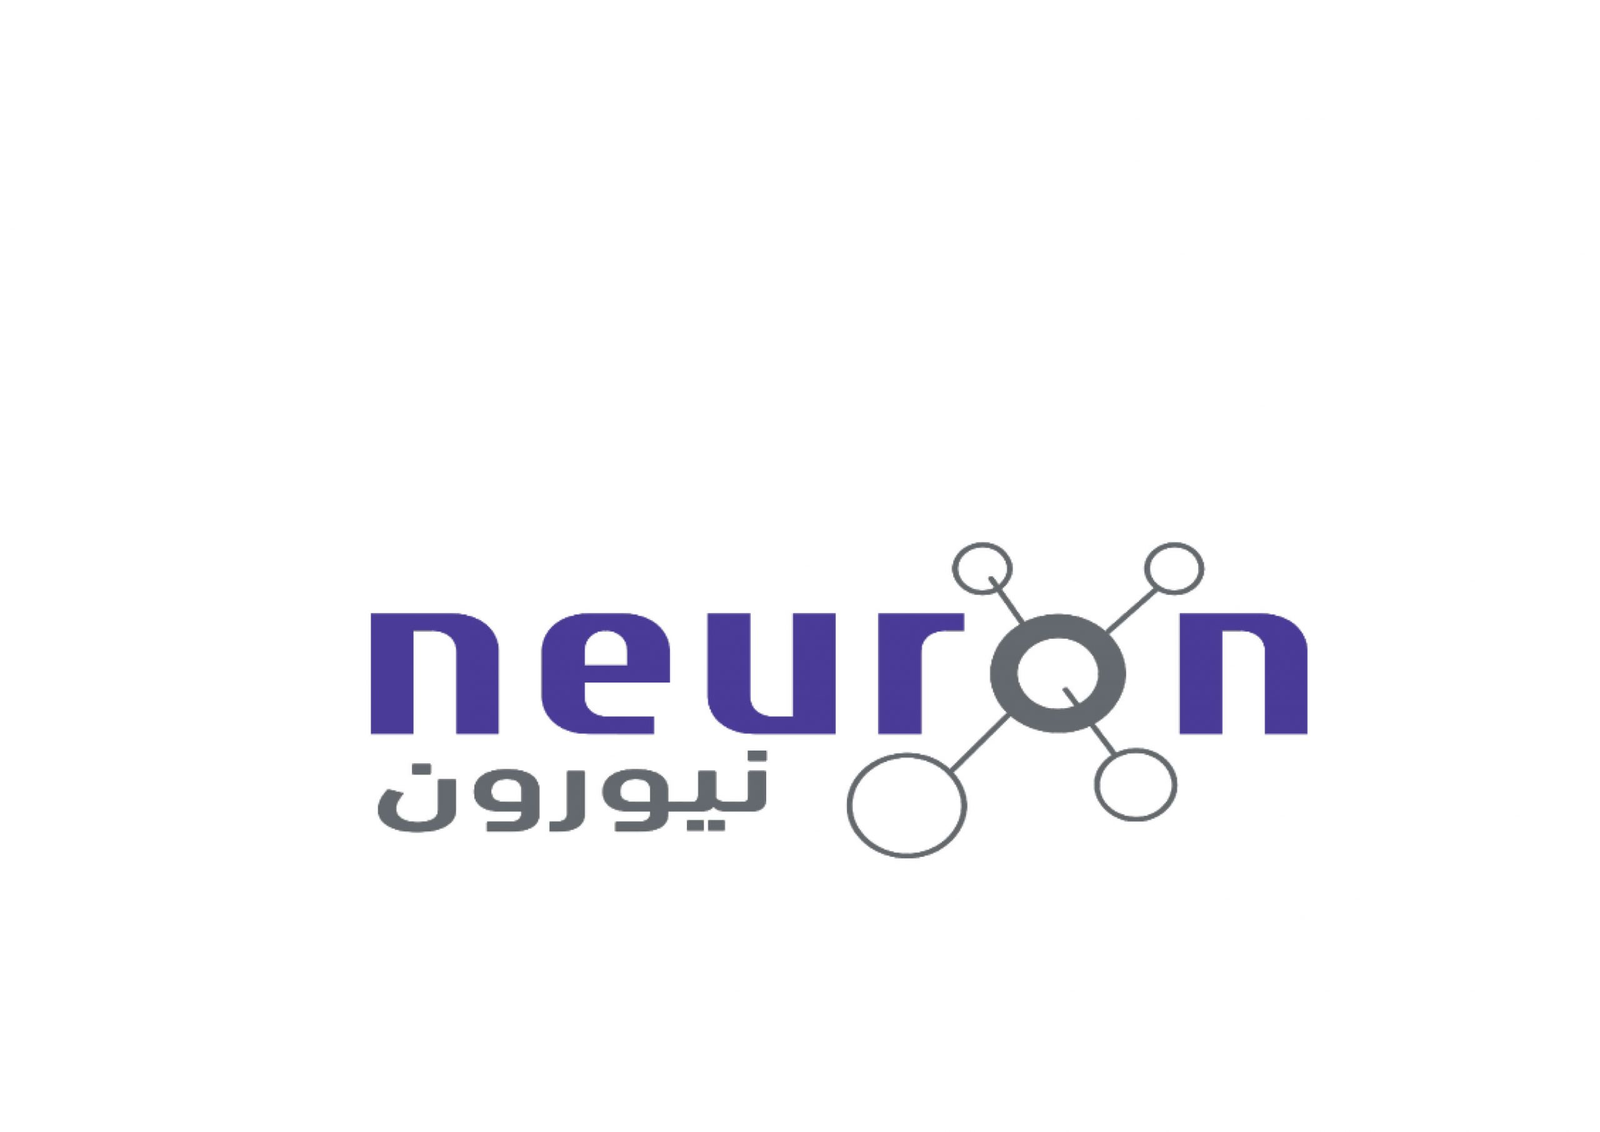 Neuron-scaled